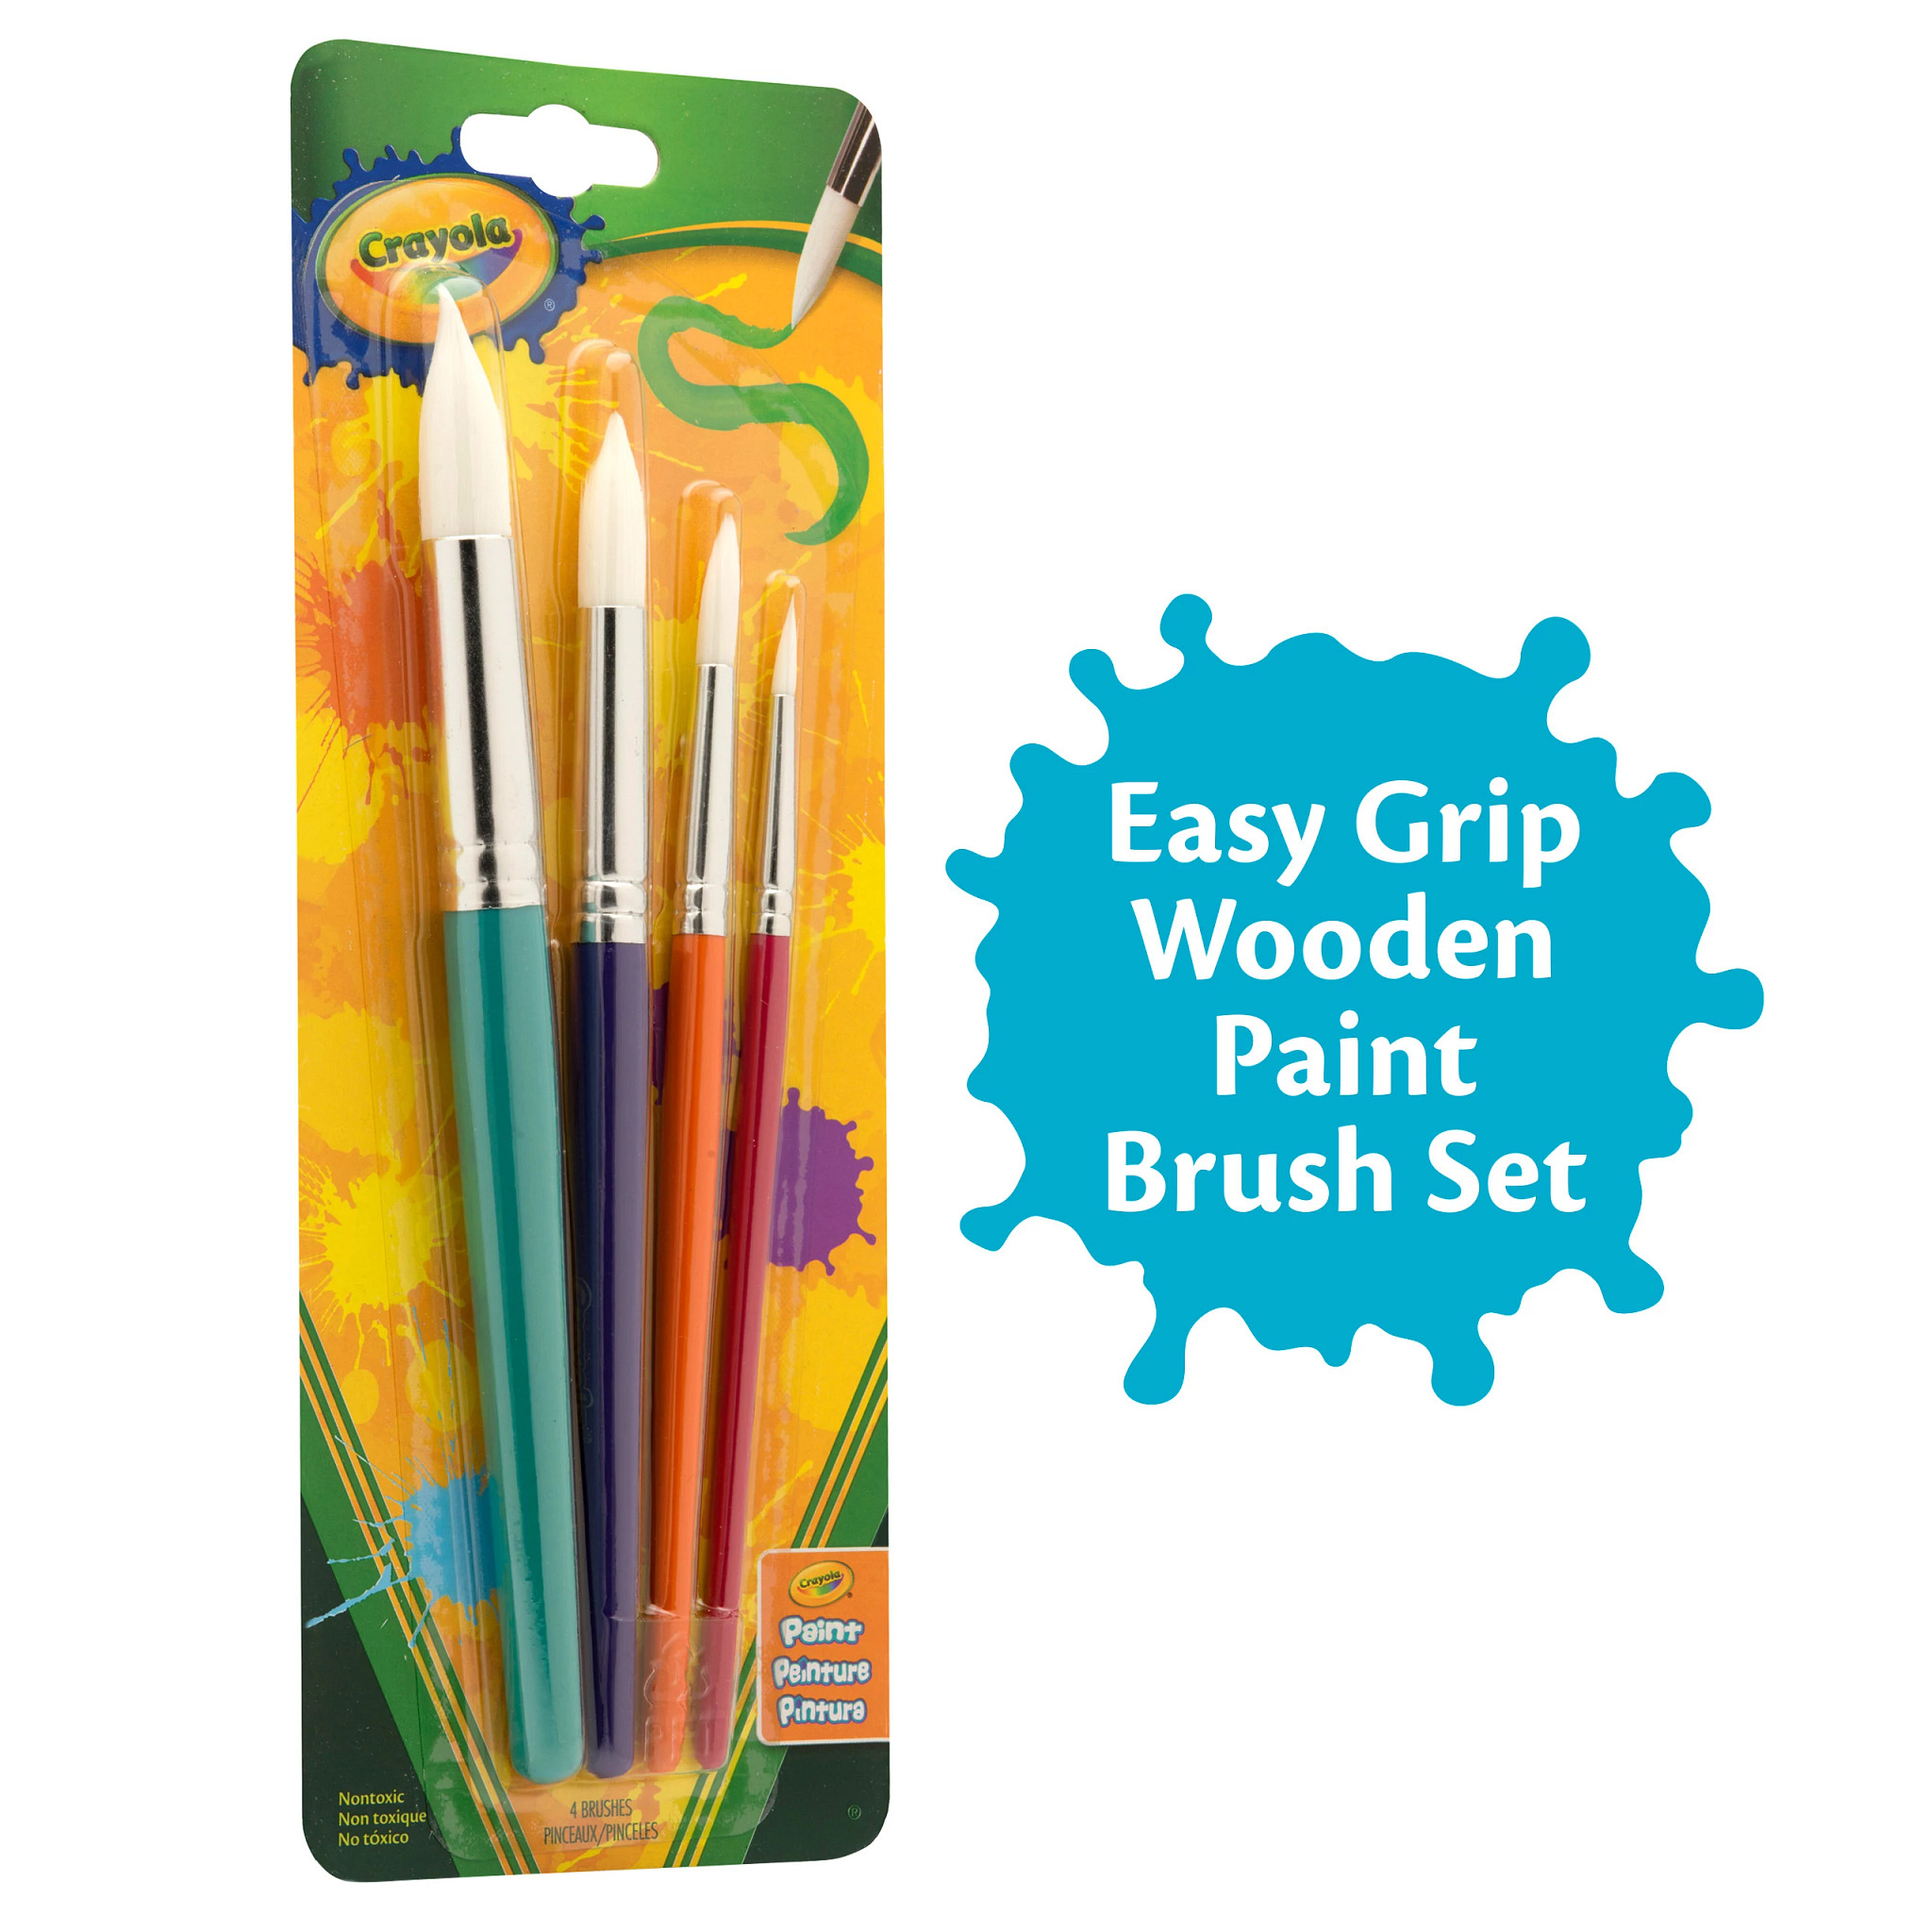 Crayola Round Soft Bristle Paint Brush Set, Multi Sizes, 4 Ct, School Supplies, Kids Paint Supplies - image 3 of 6